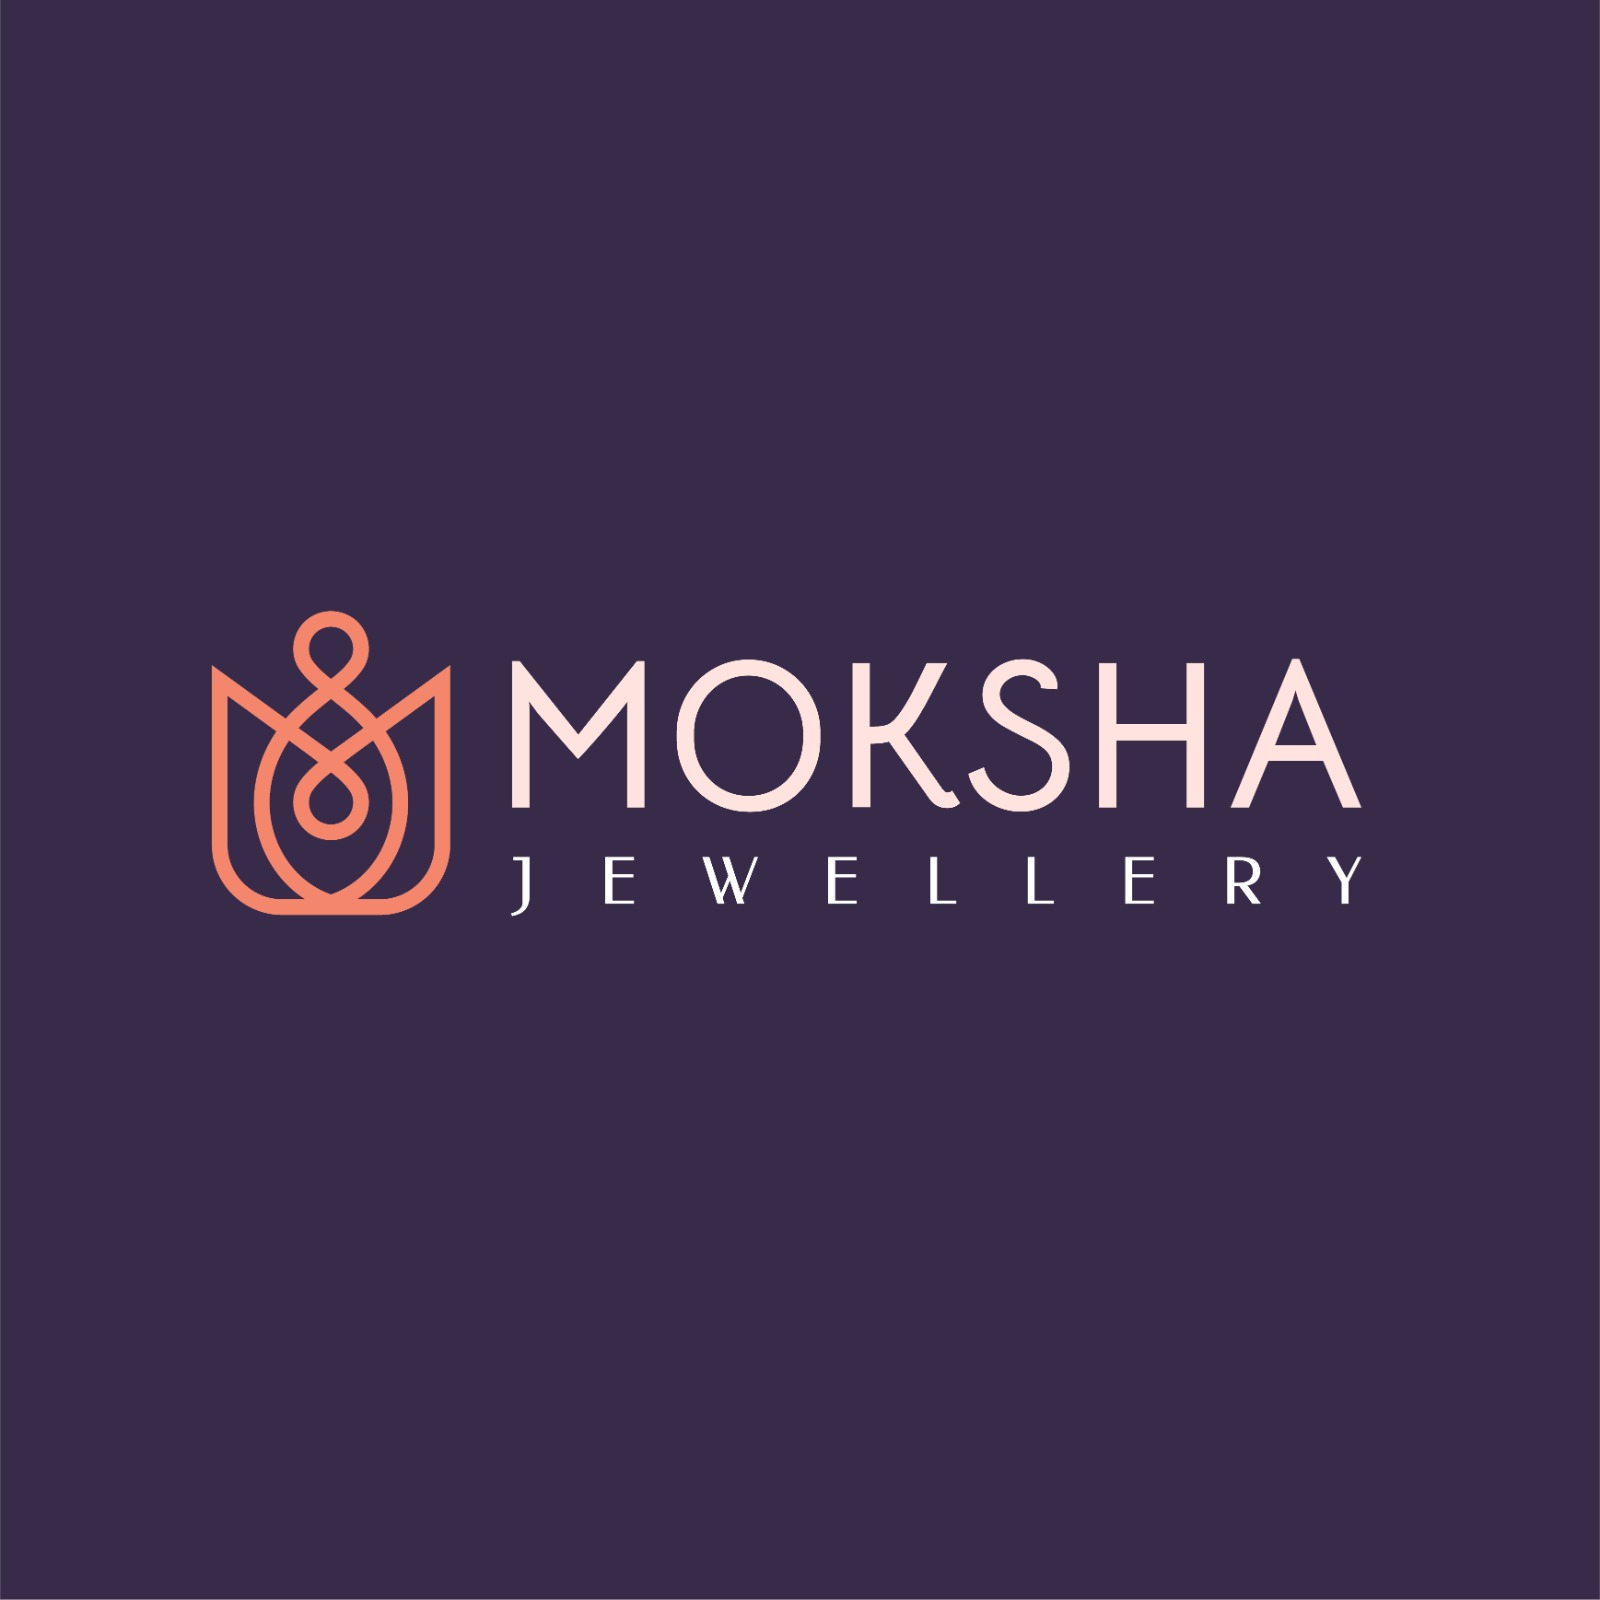 Moksha jewellery